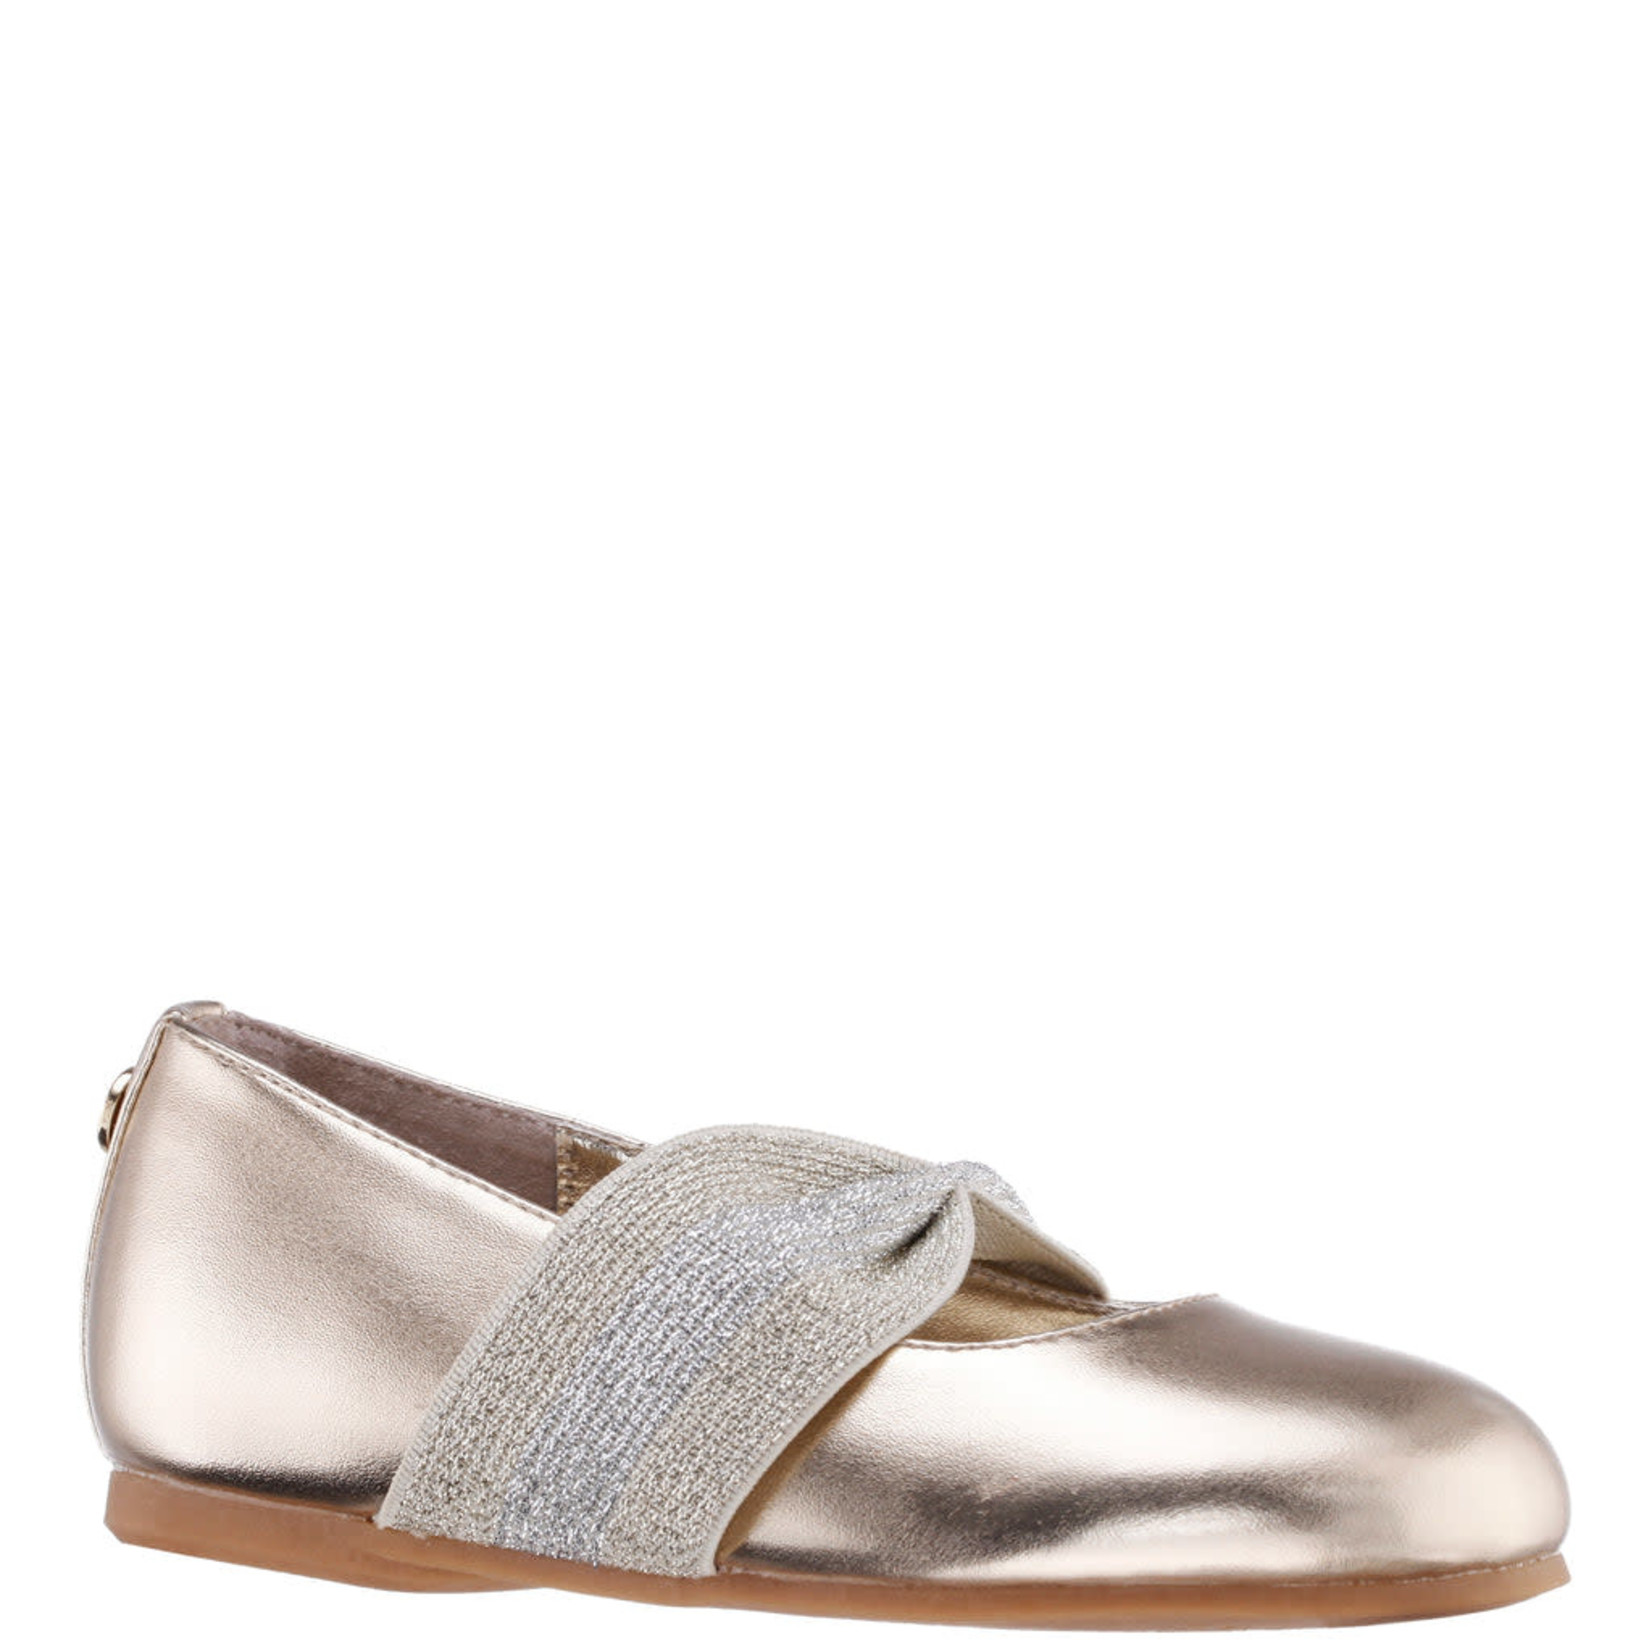 Nina Footwear Krissy-T in Gold Metallic for Toddlers By Nina Footwear